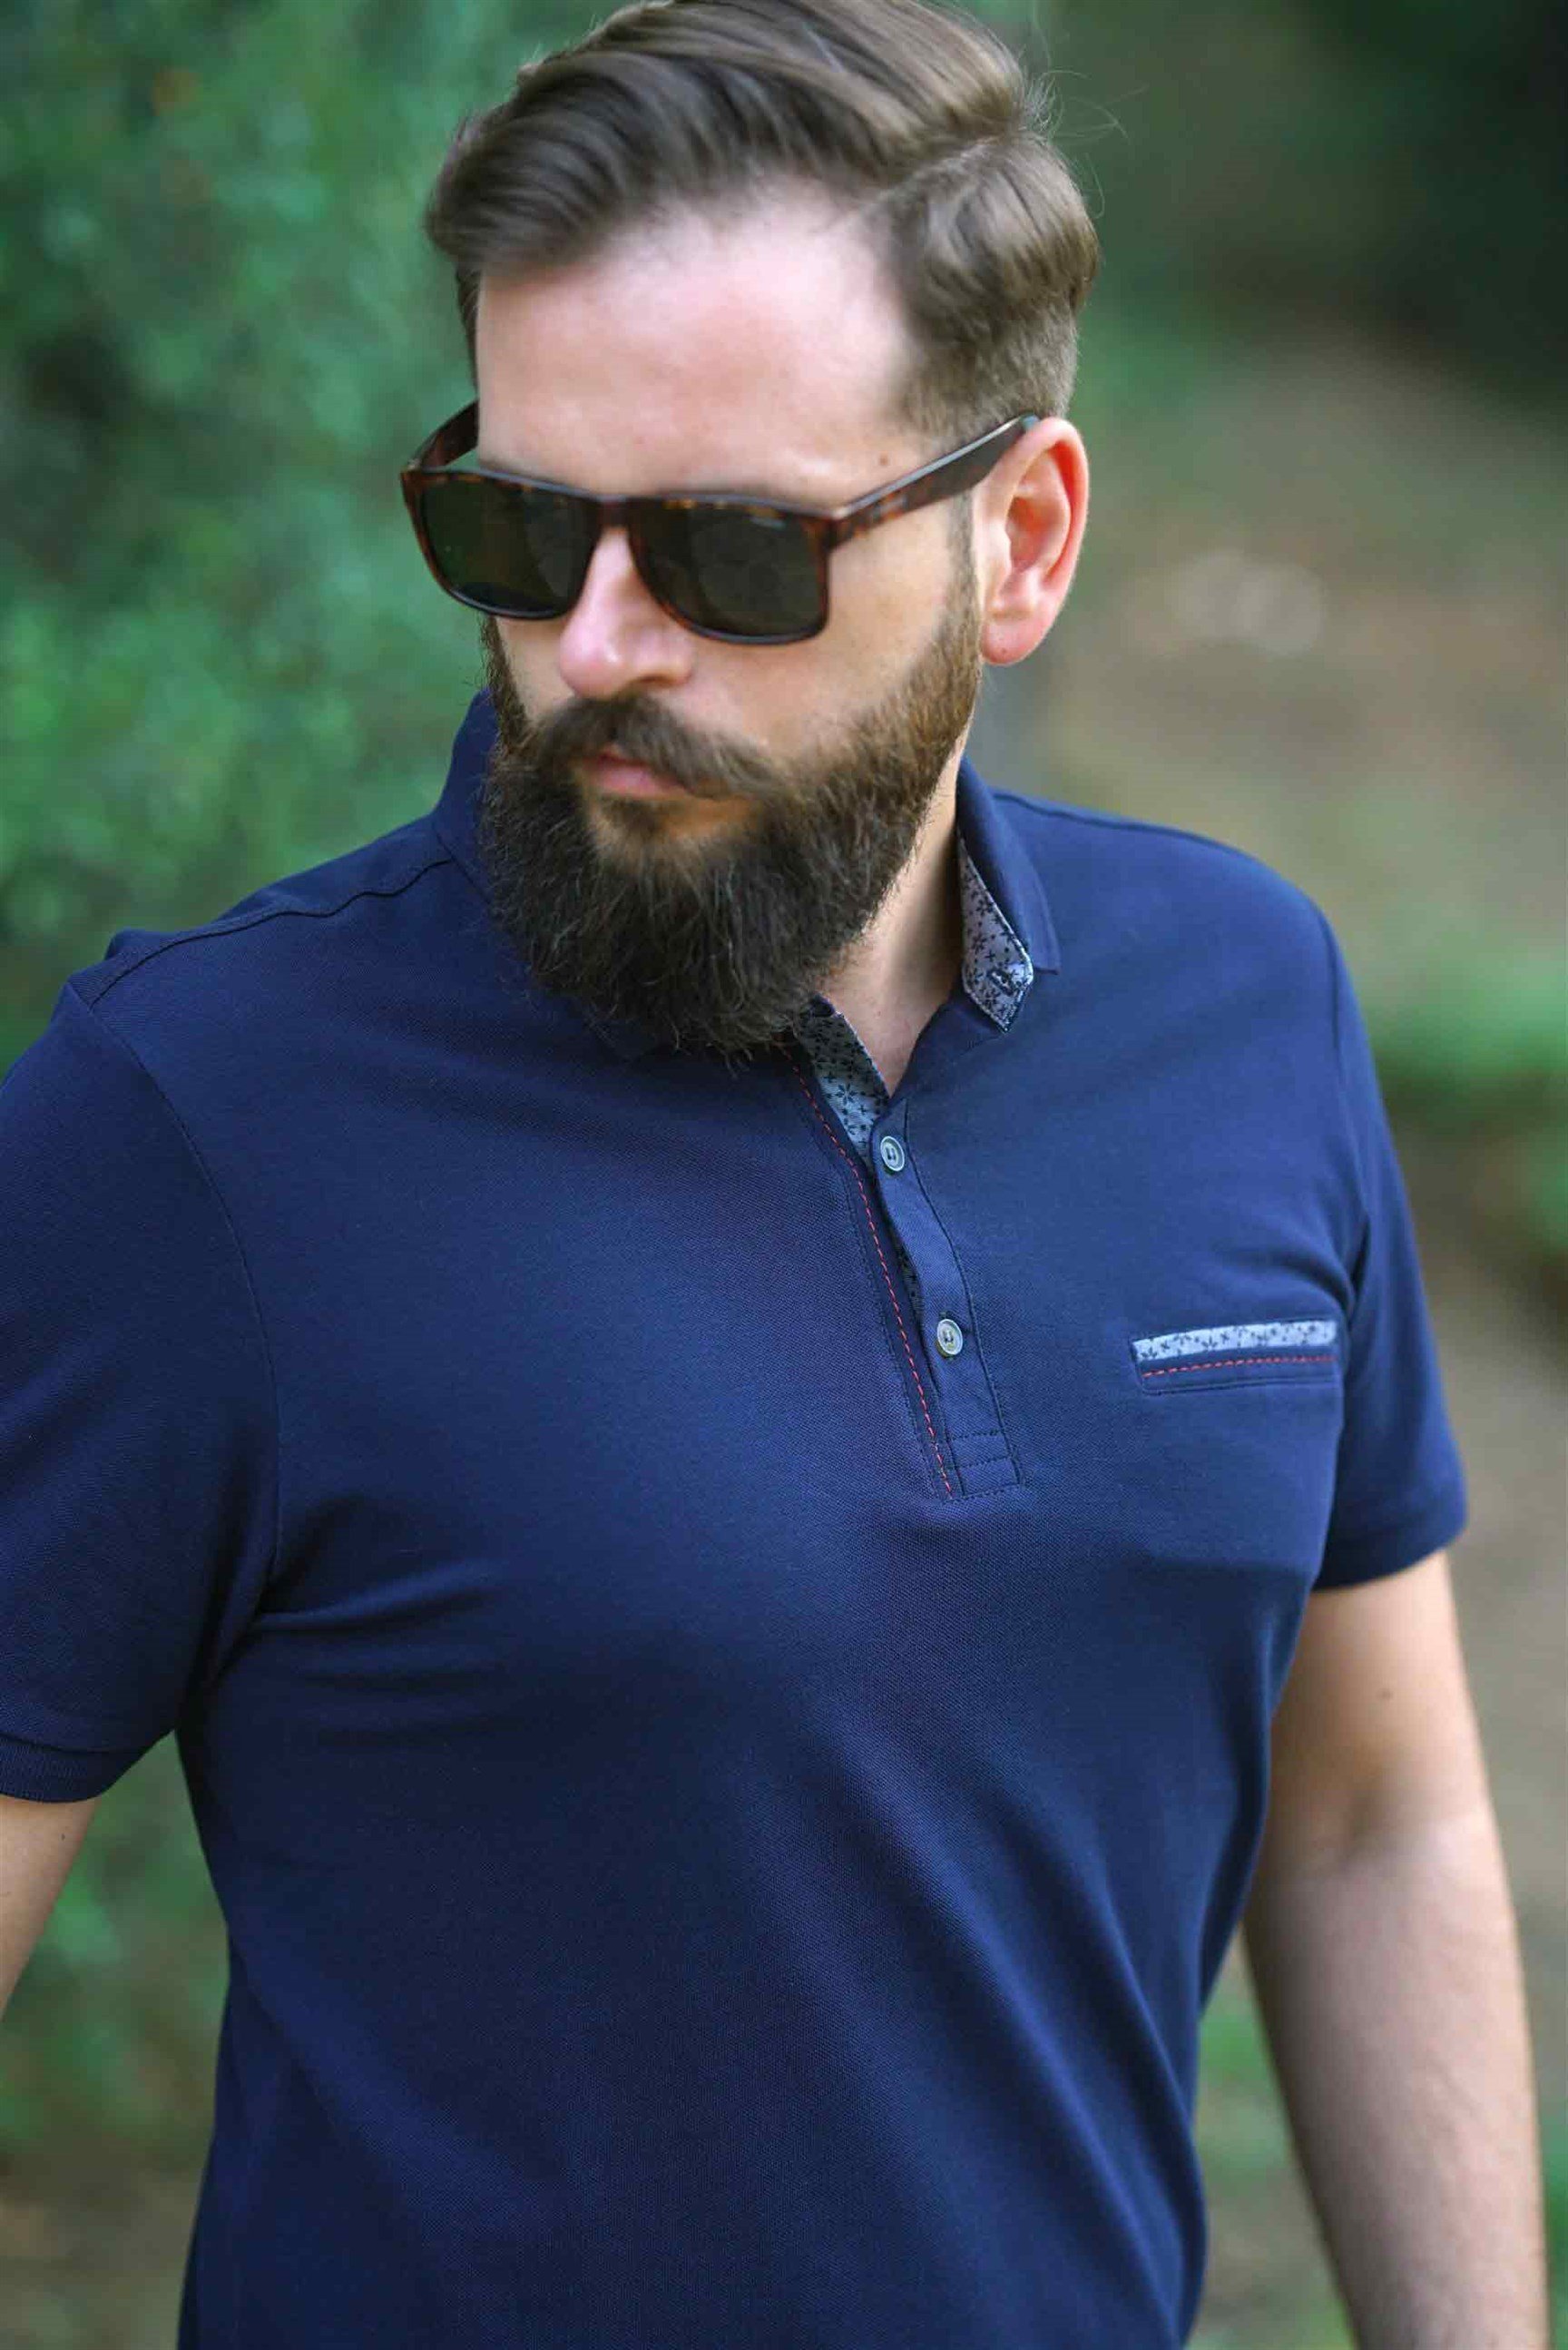 Ferraro Erkek Cepli Polo Yaka T-Shirt - Lacivert | Erkek Giyim |  modaferraro.com.tr